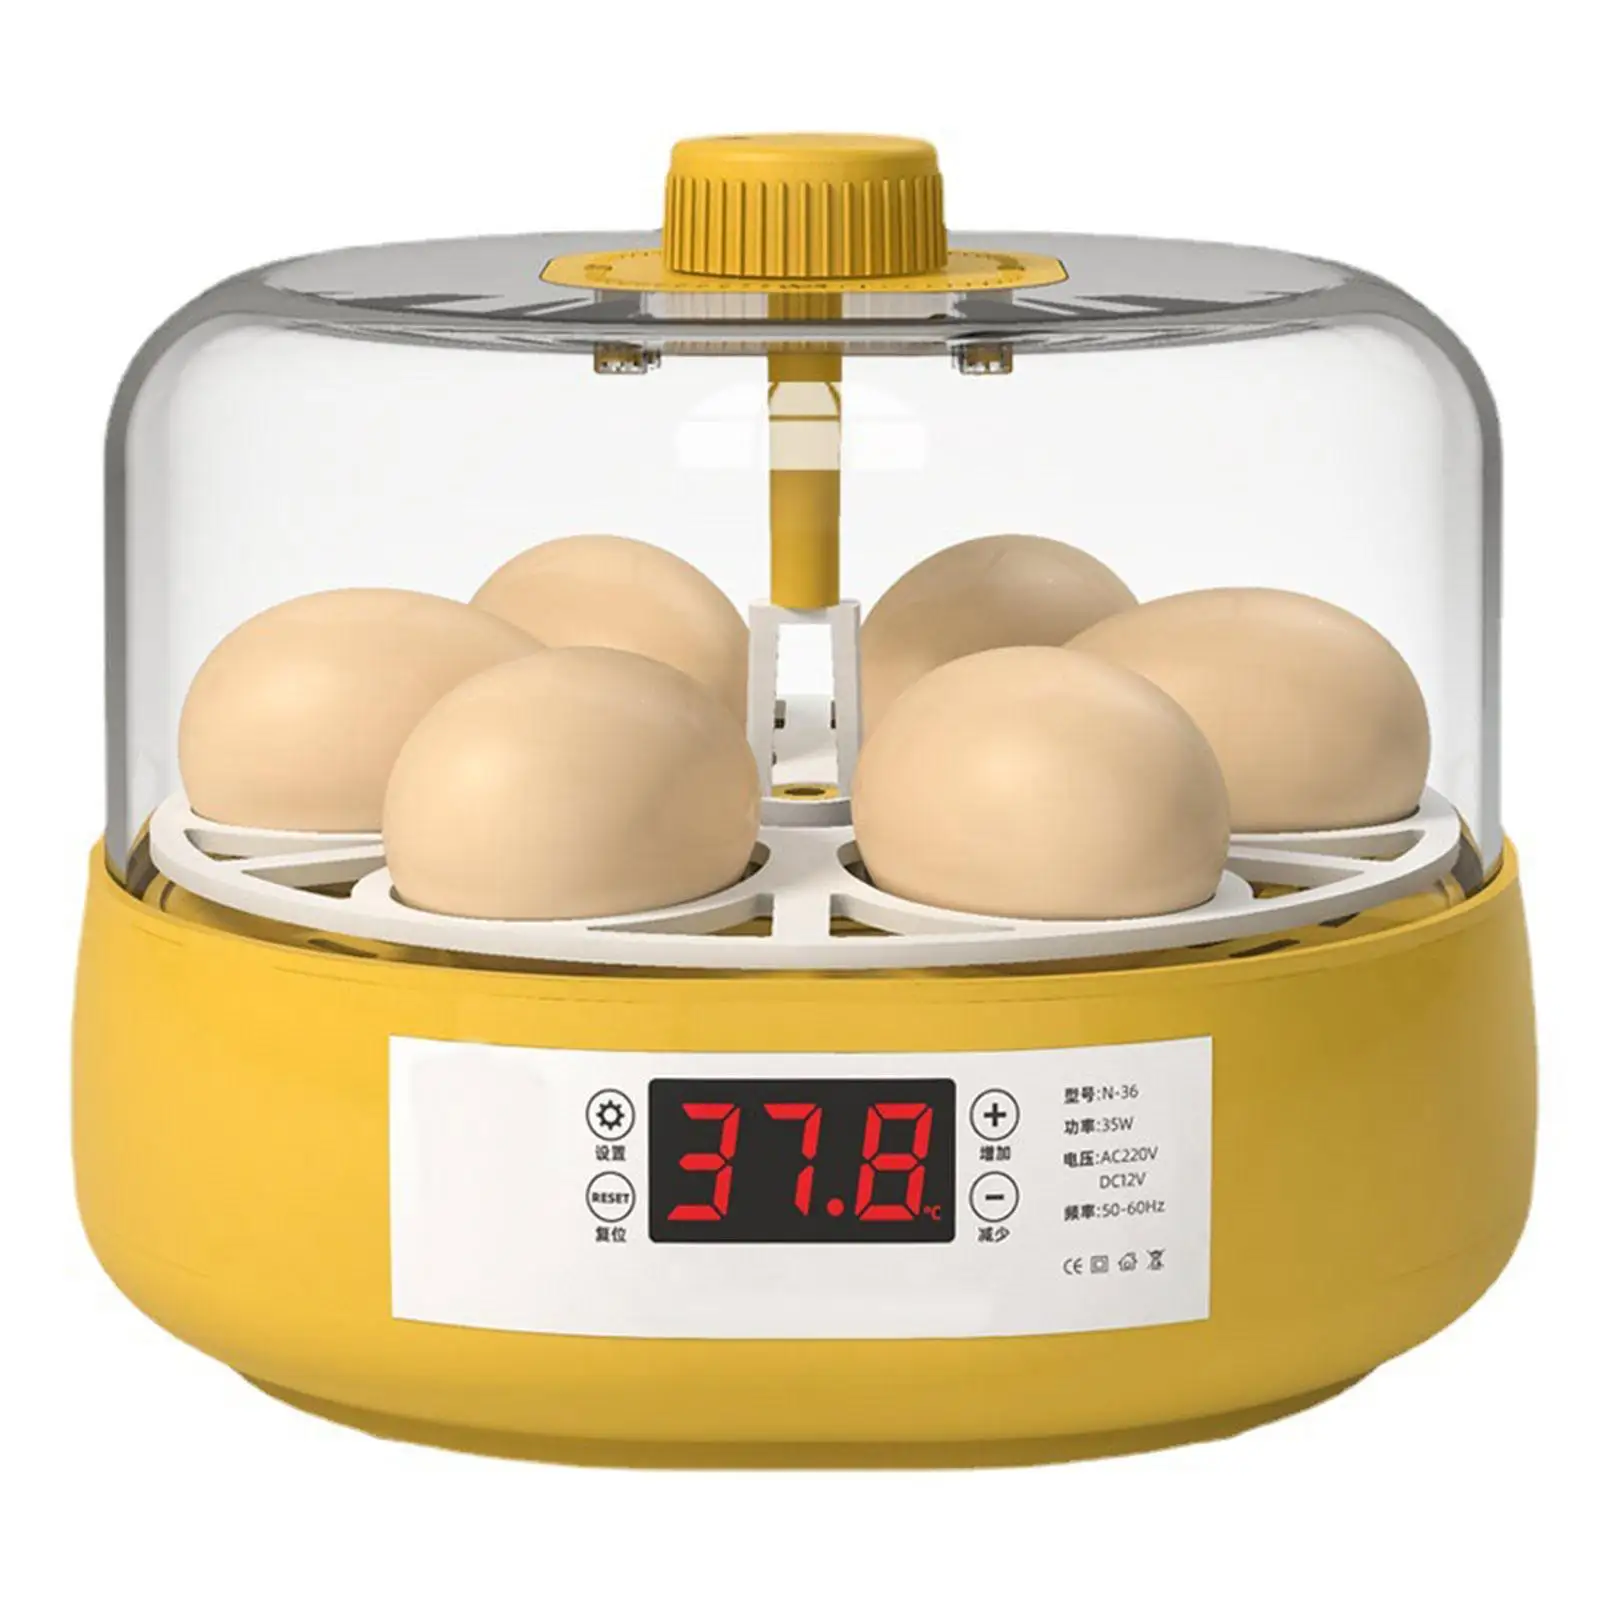 Egg Incubator Egg Turner Hatching Digital Poultry Egg Hatcher Machine for Chicken Quail Goose Birds